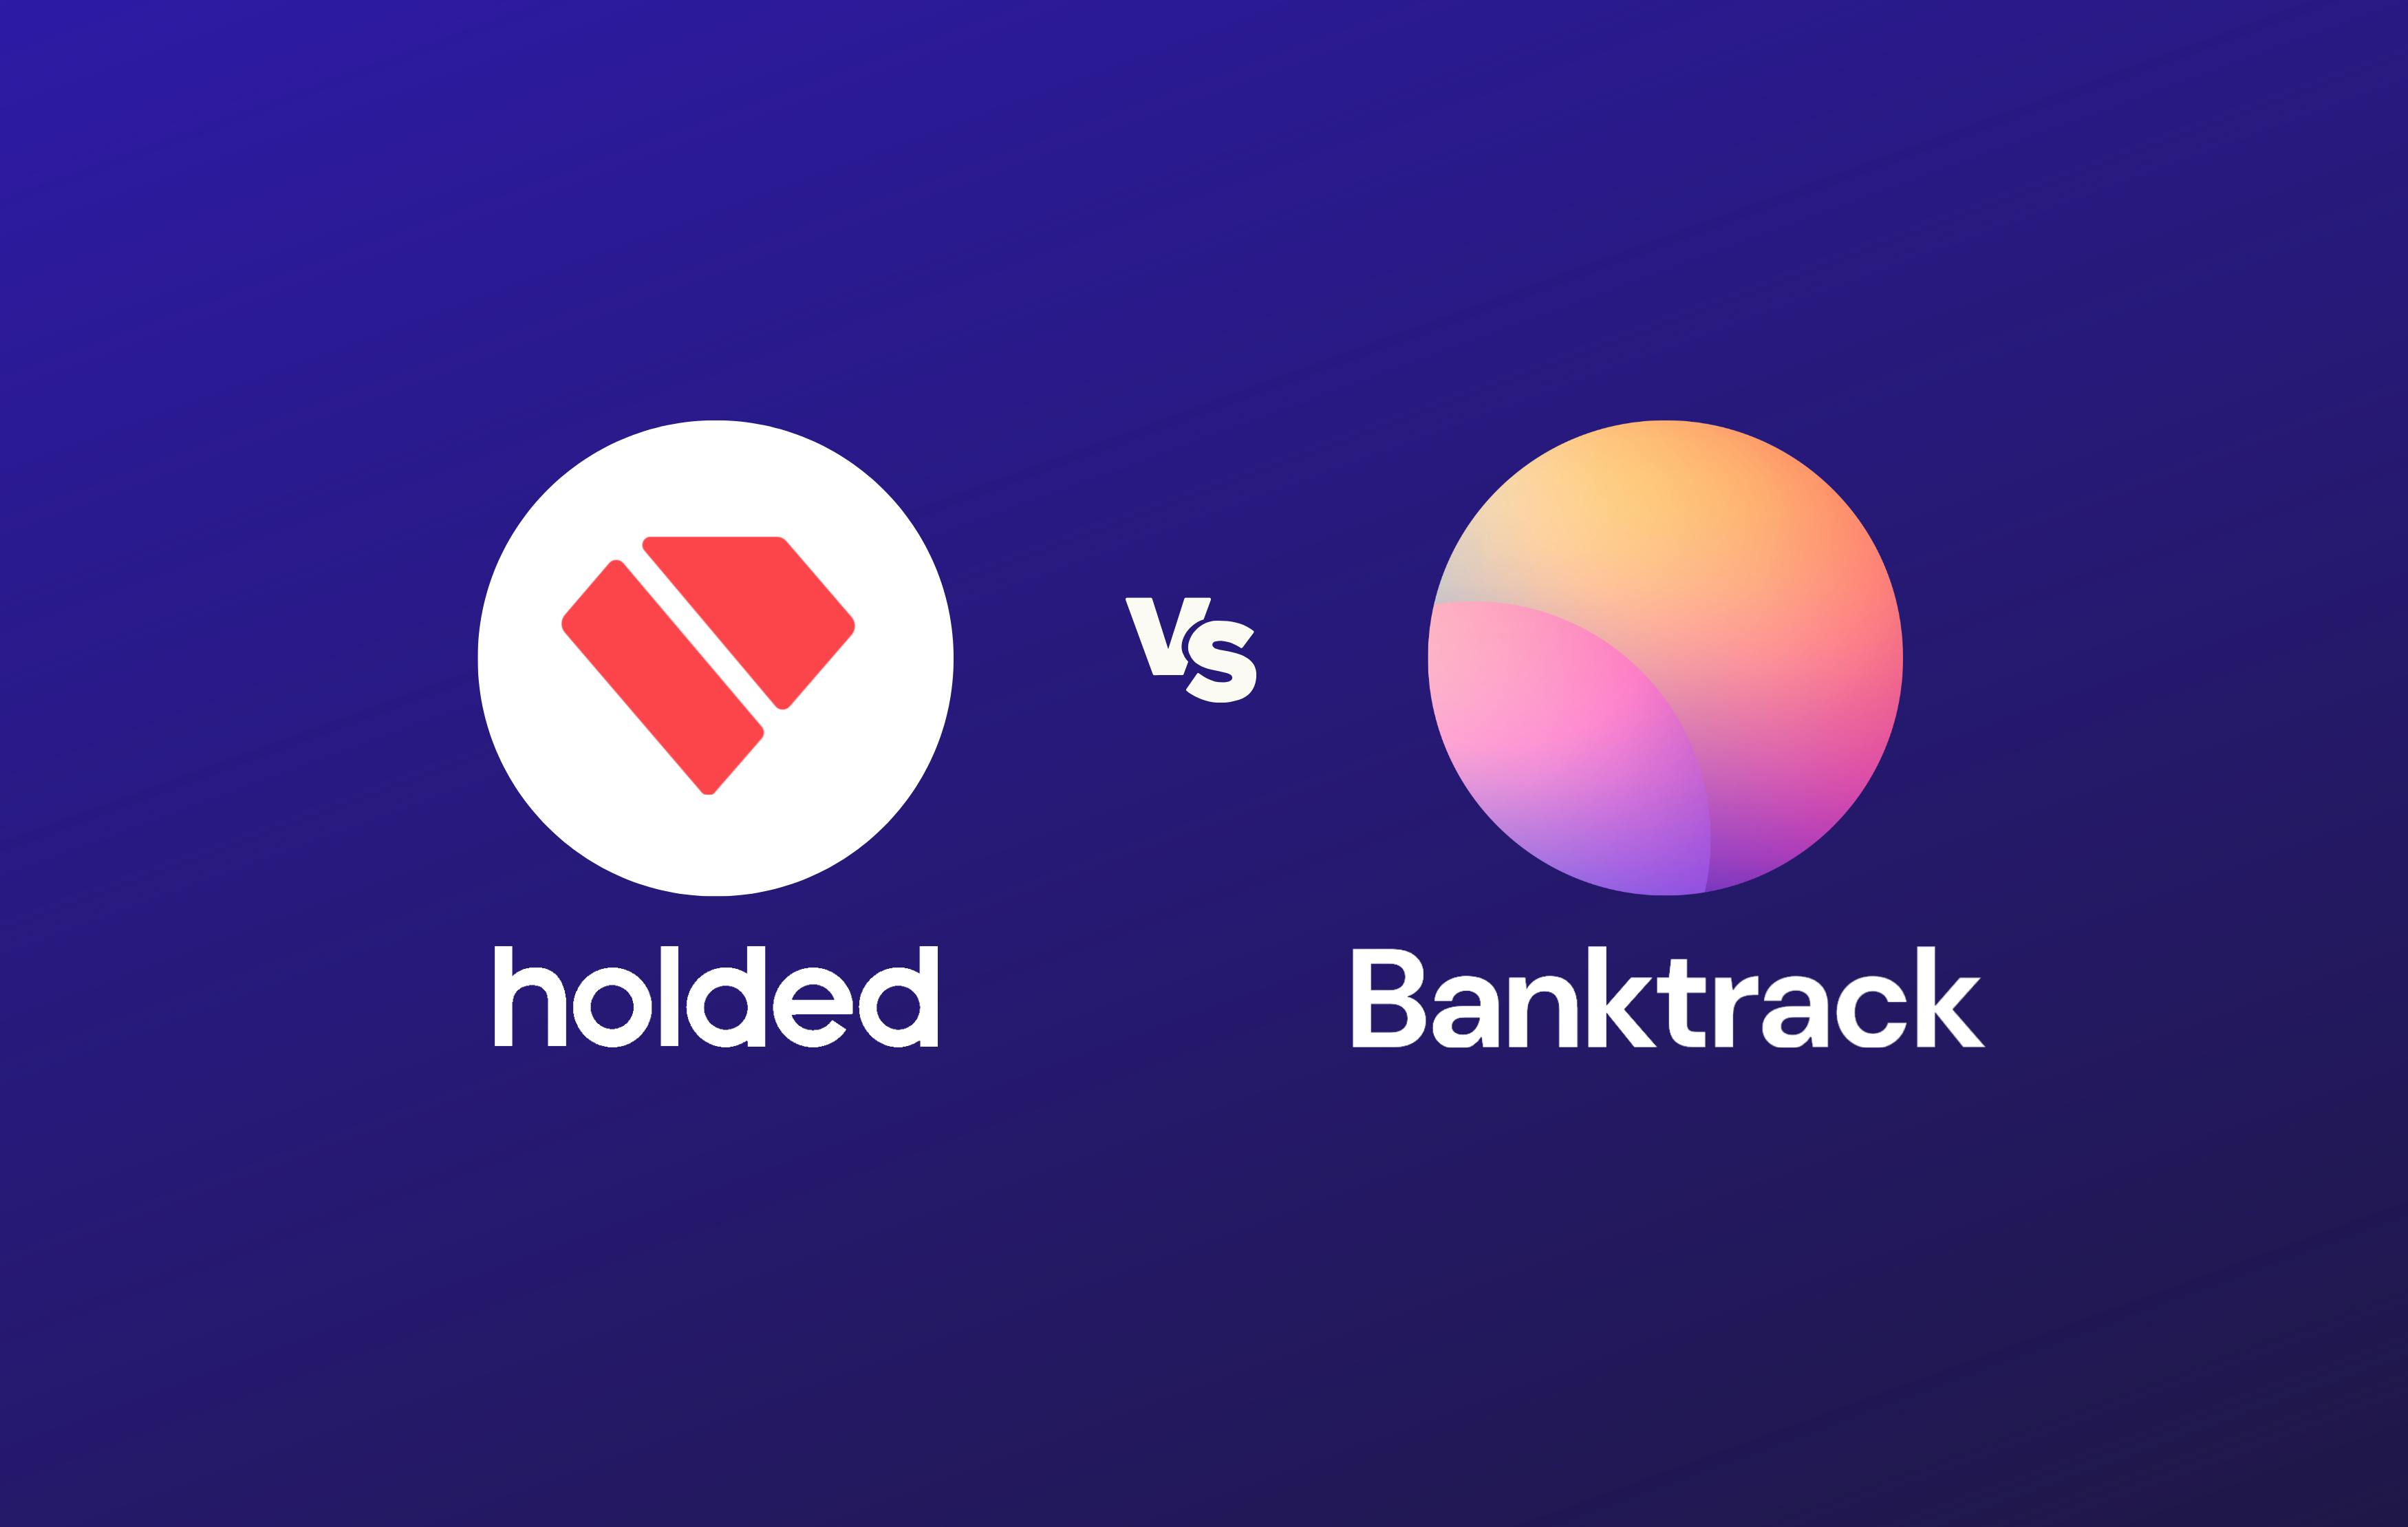 La alternativa de Holded que es Banktrack comparados frente a frente